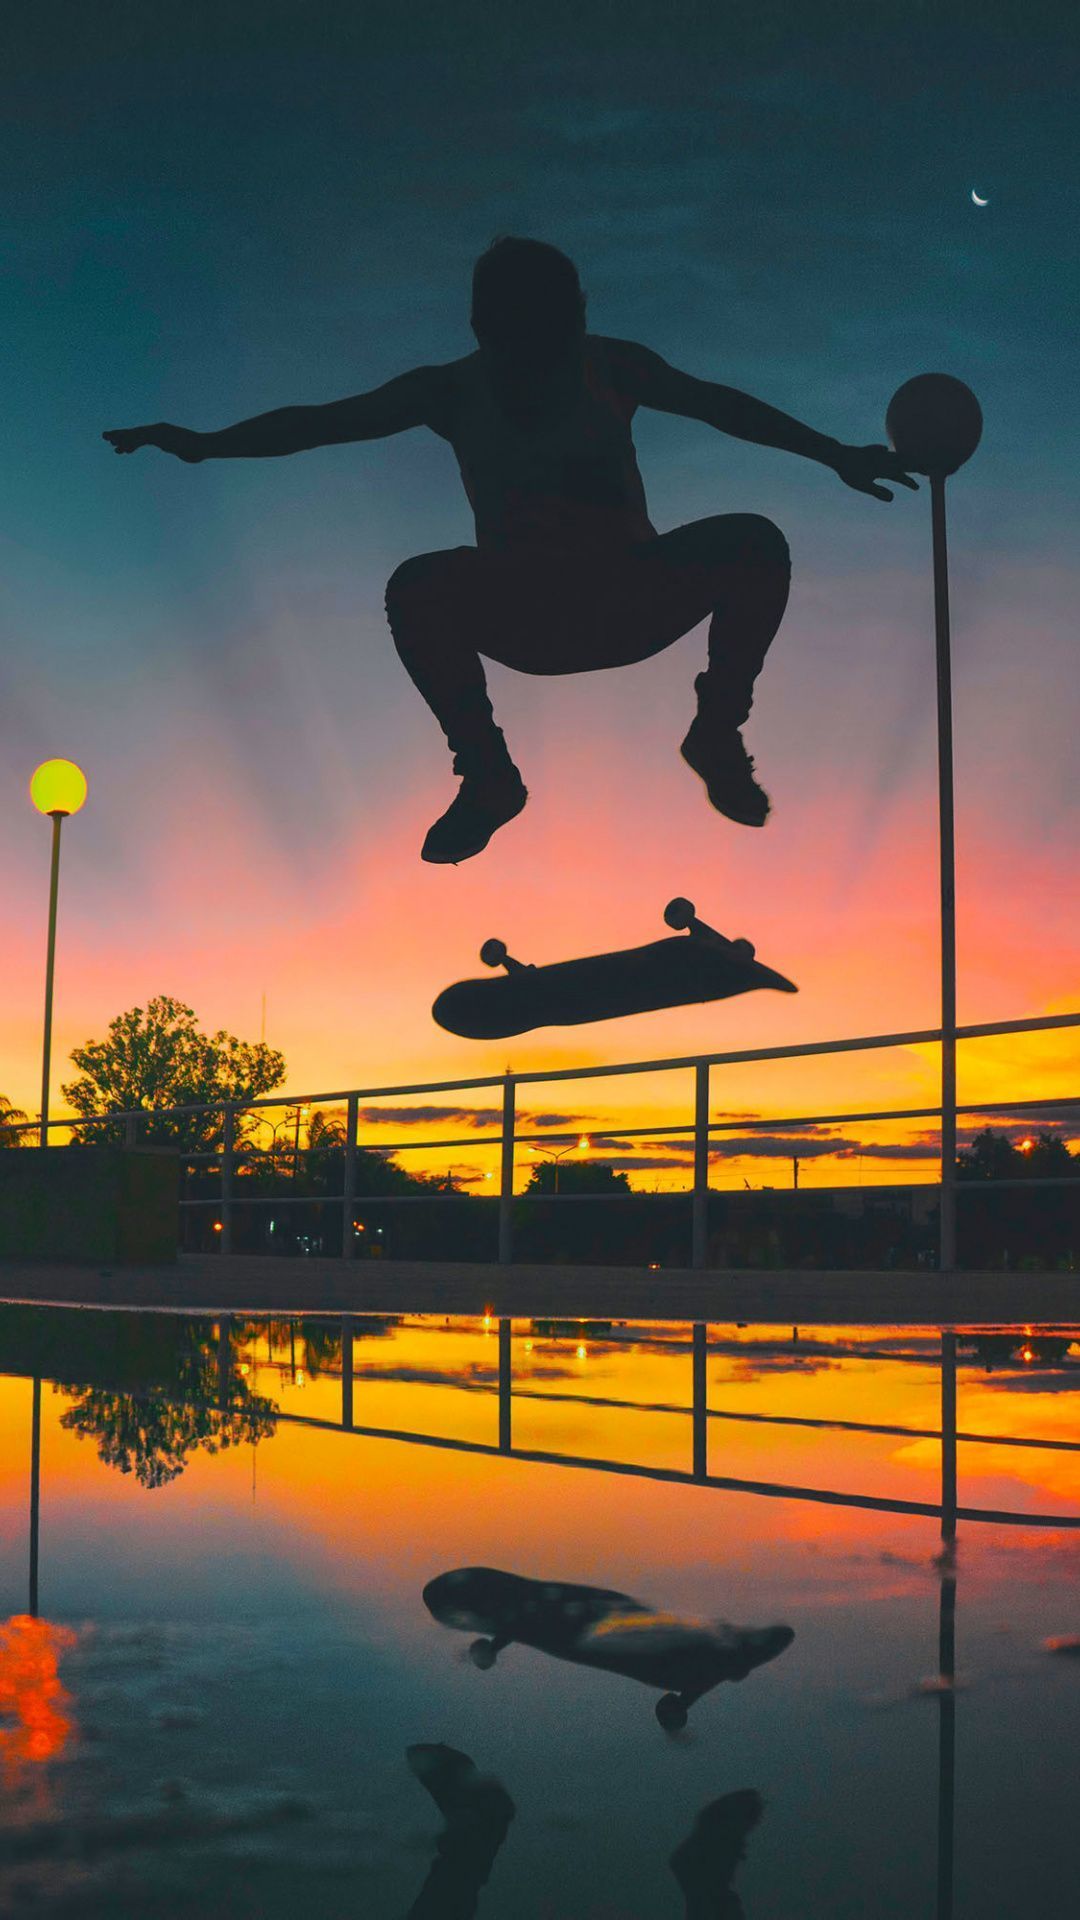 skateboarding #silhouette #wallpaper #sports #sunset #man #xMan